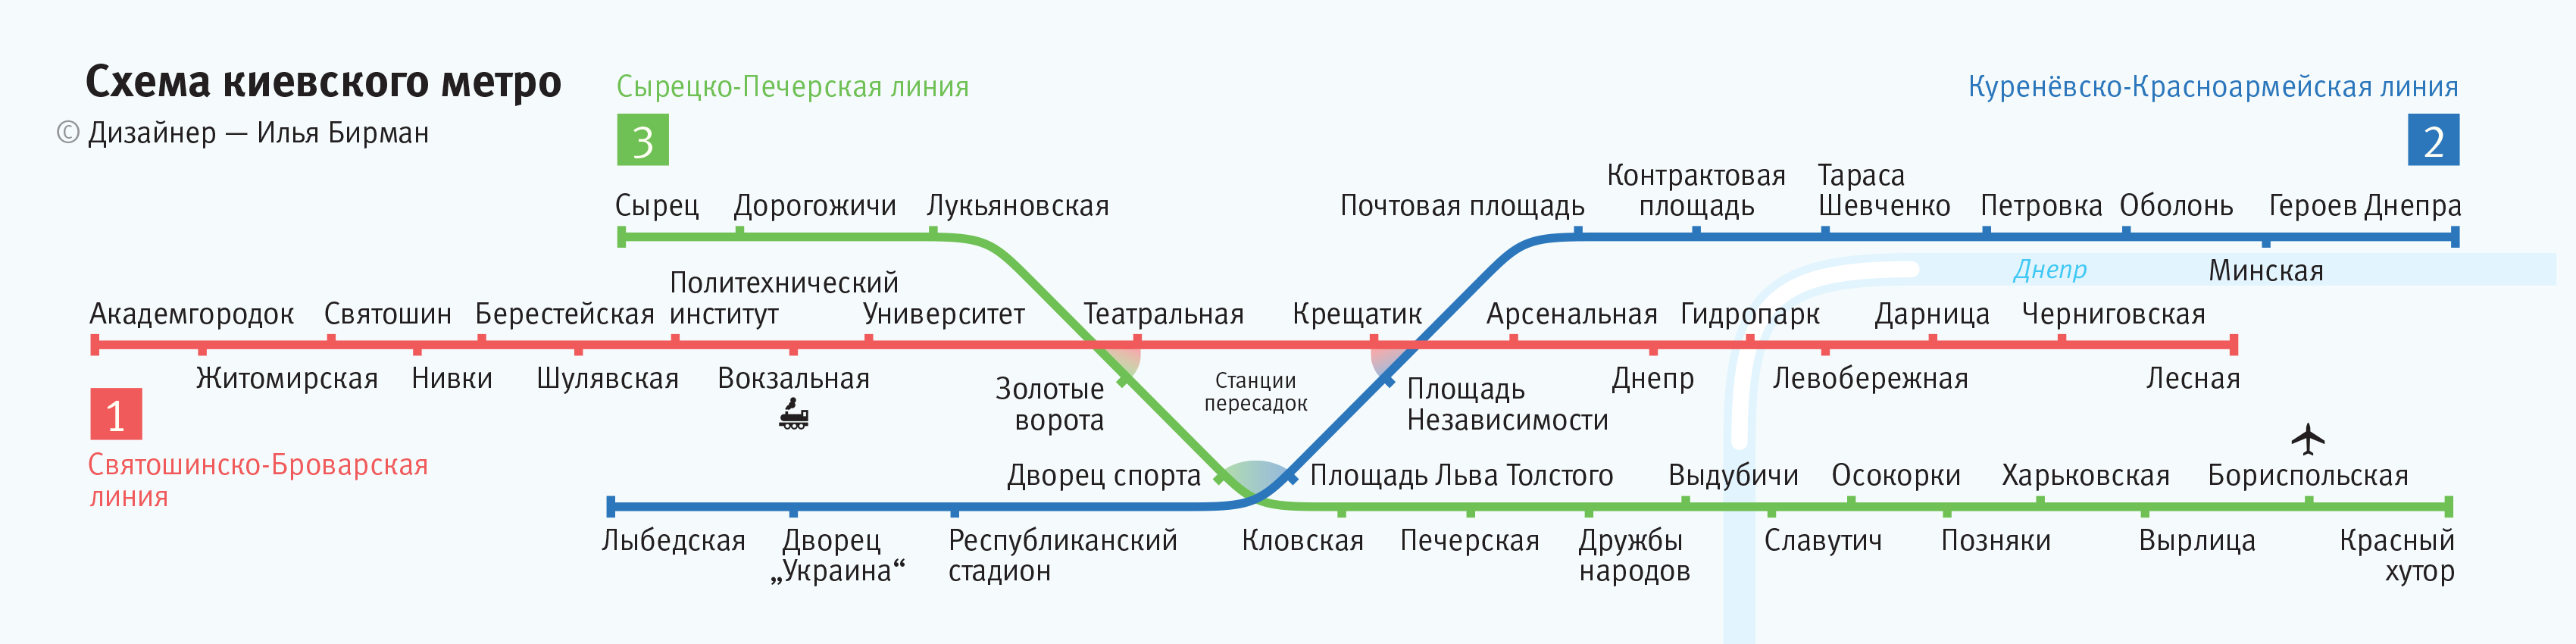 Схема Киевского метро Ильи Бирмана